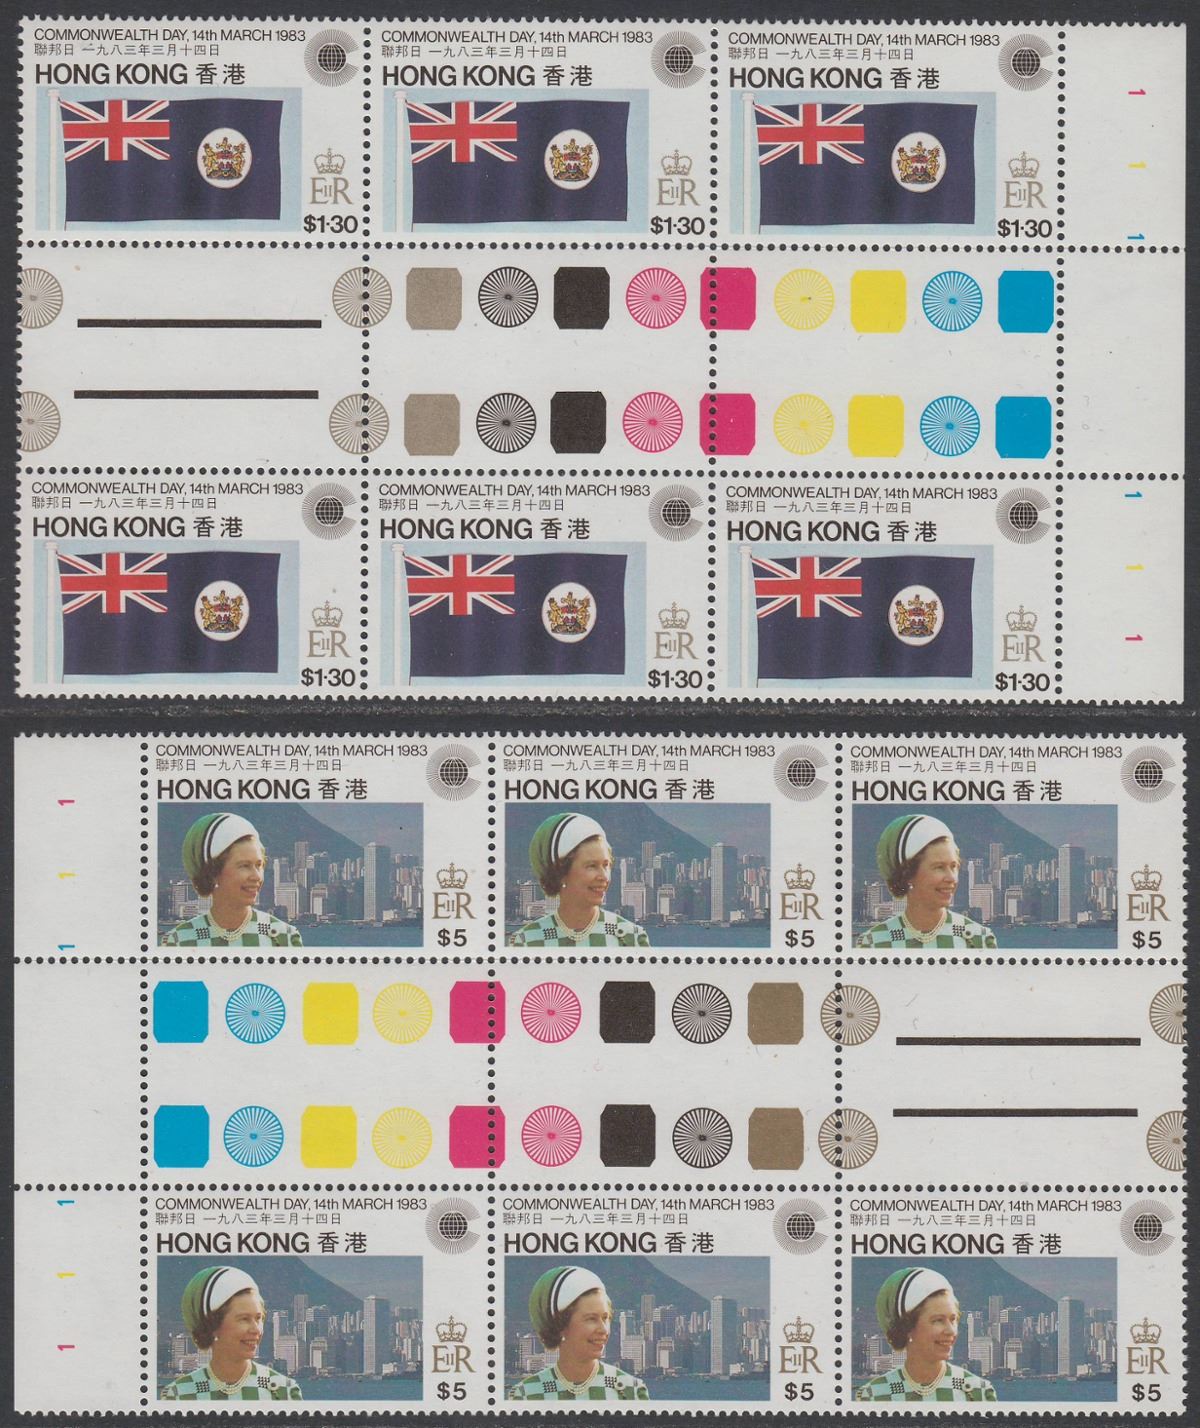 Hong Kong 1983 QEII Commonwealth Day Interpanneu Block Set Mint SG438-441 c £36+